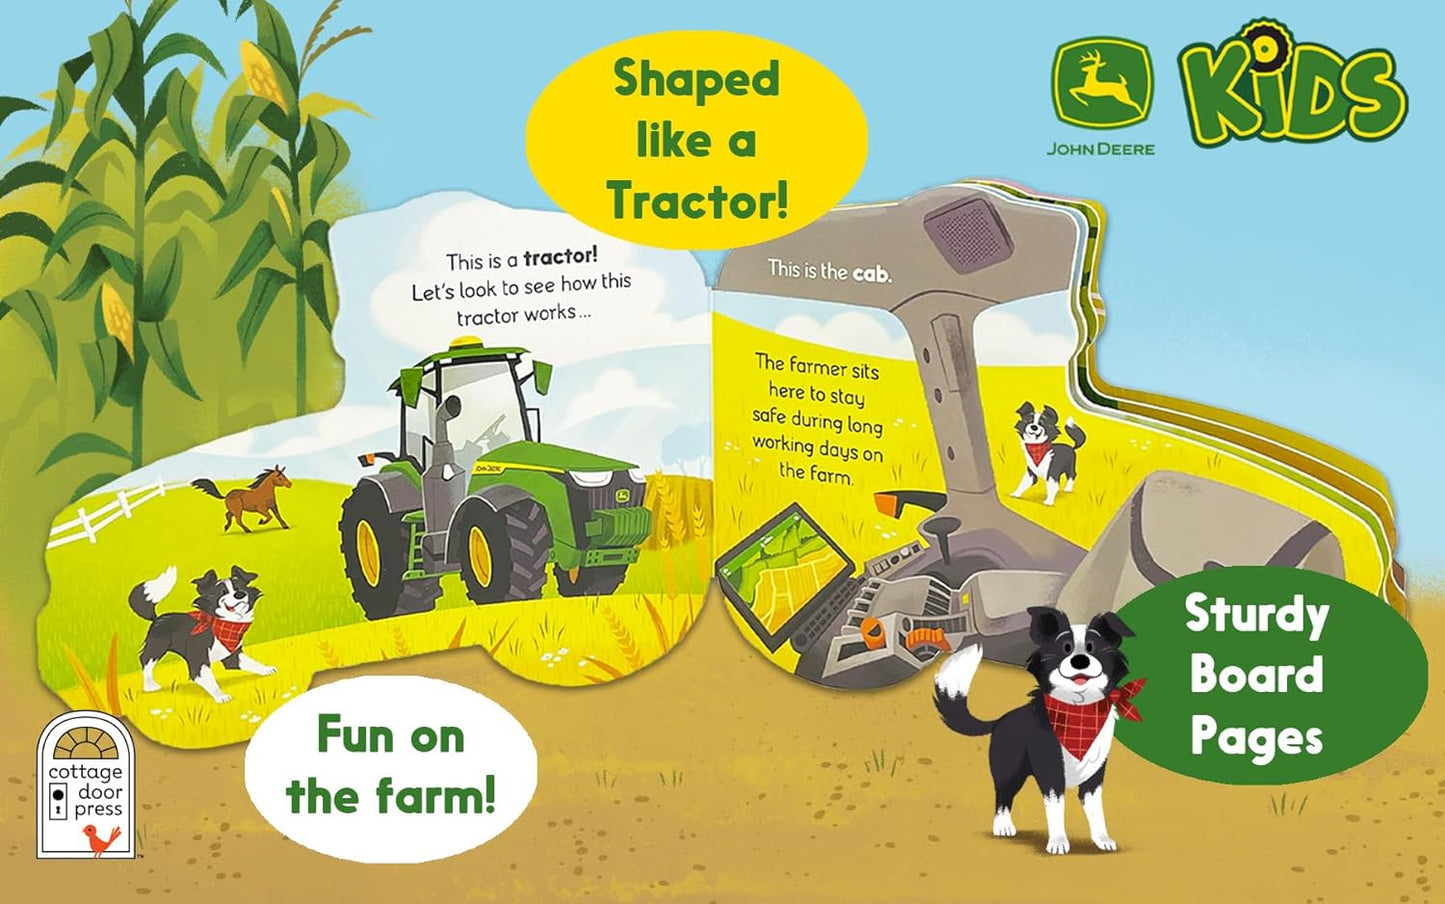 John Deere Kids Tractor Board Book